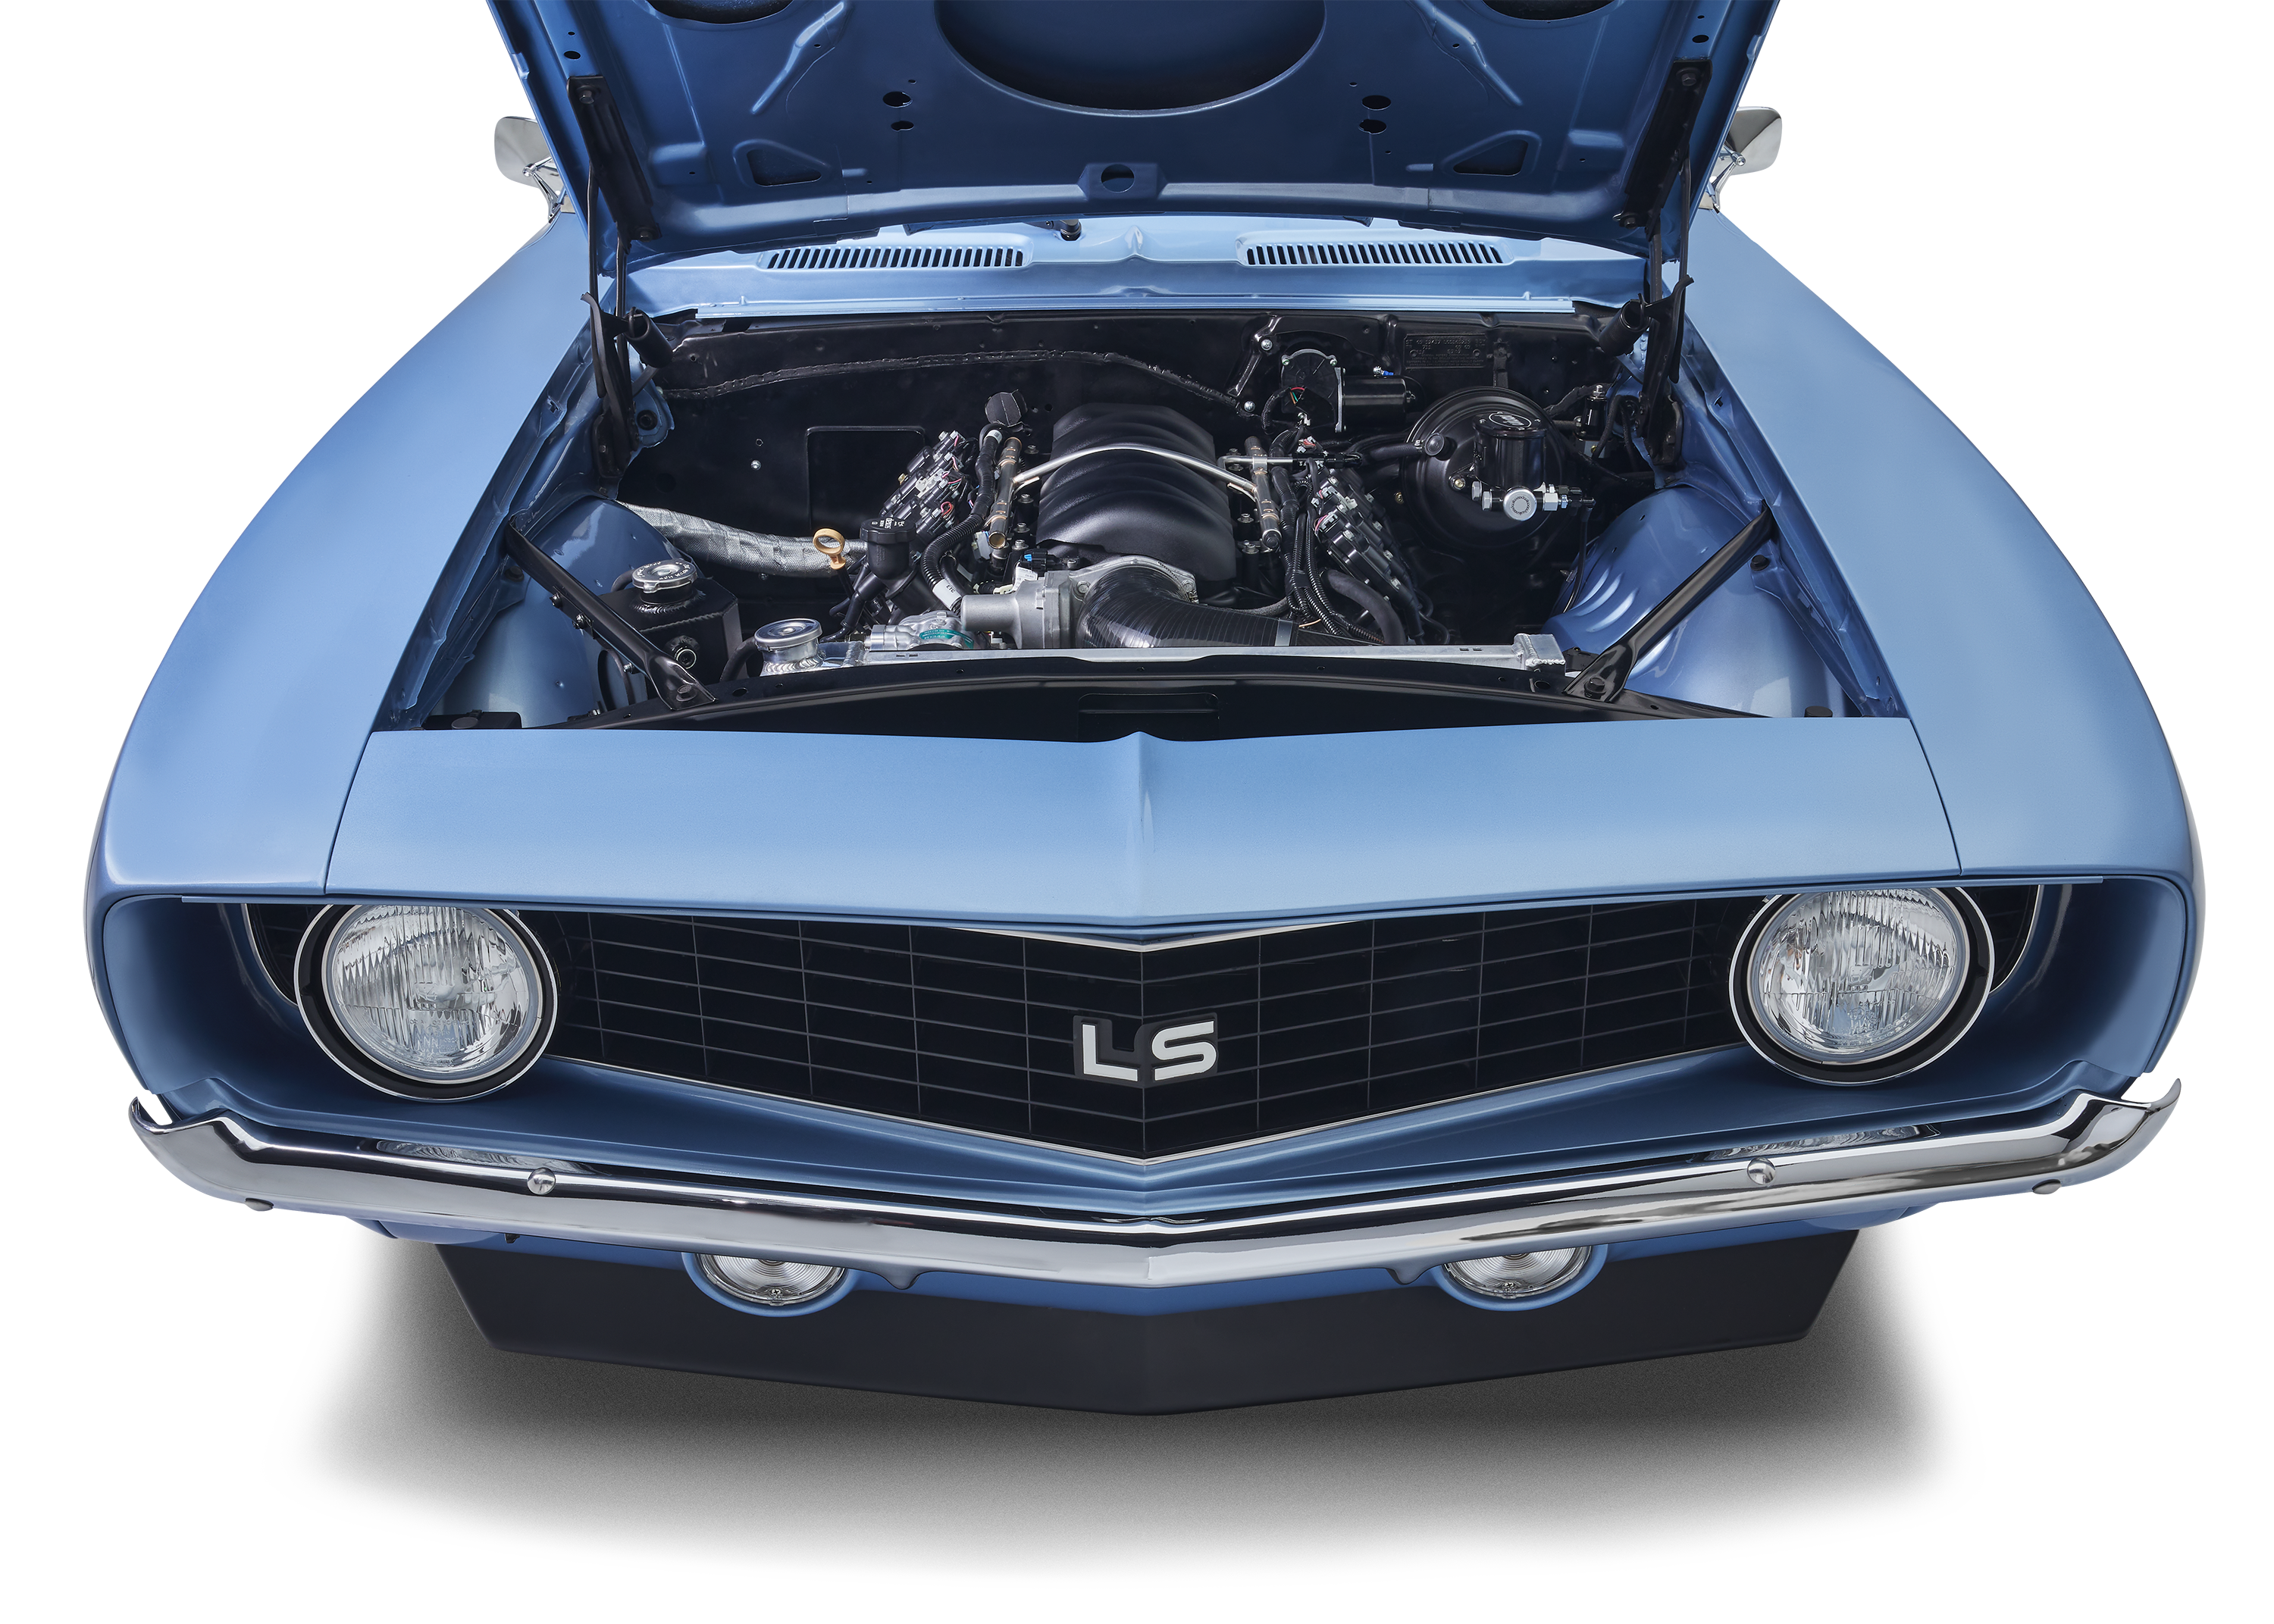 LS Camaro Engine